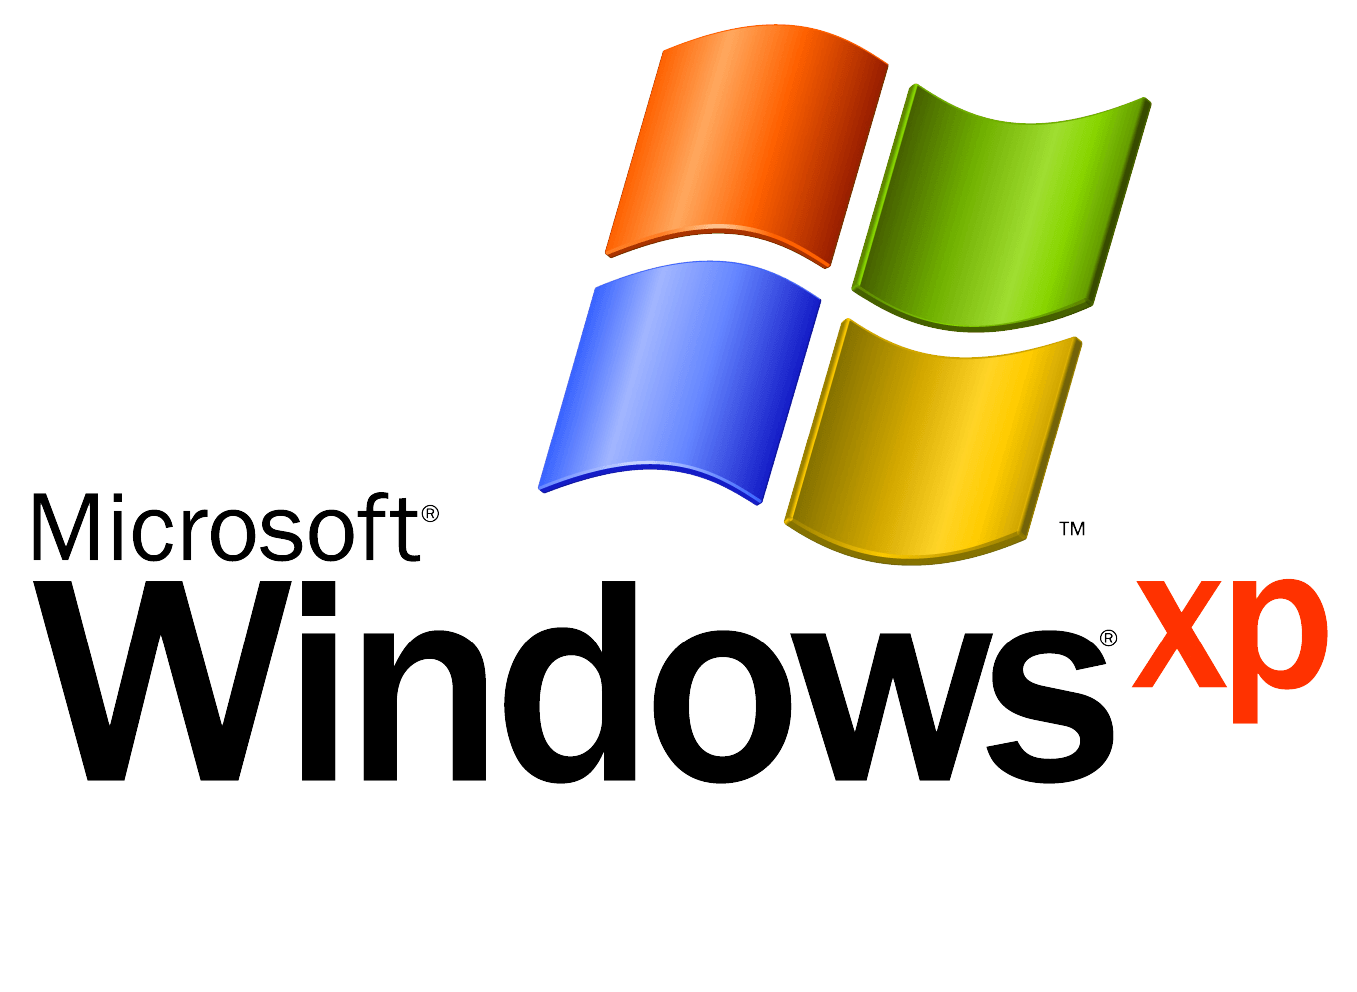 Windows 4 Logo - Image - Windows XP Logo 2001-2007.png | Logopedia | FANDOM powered ...